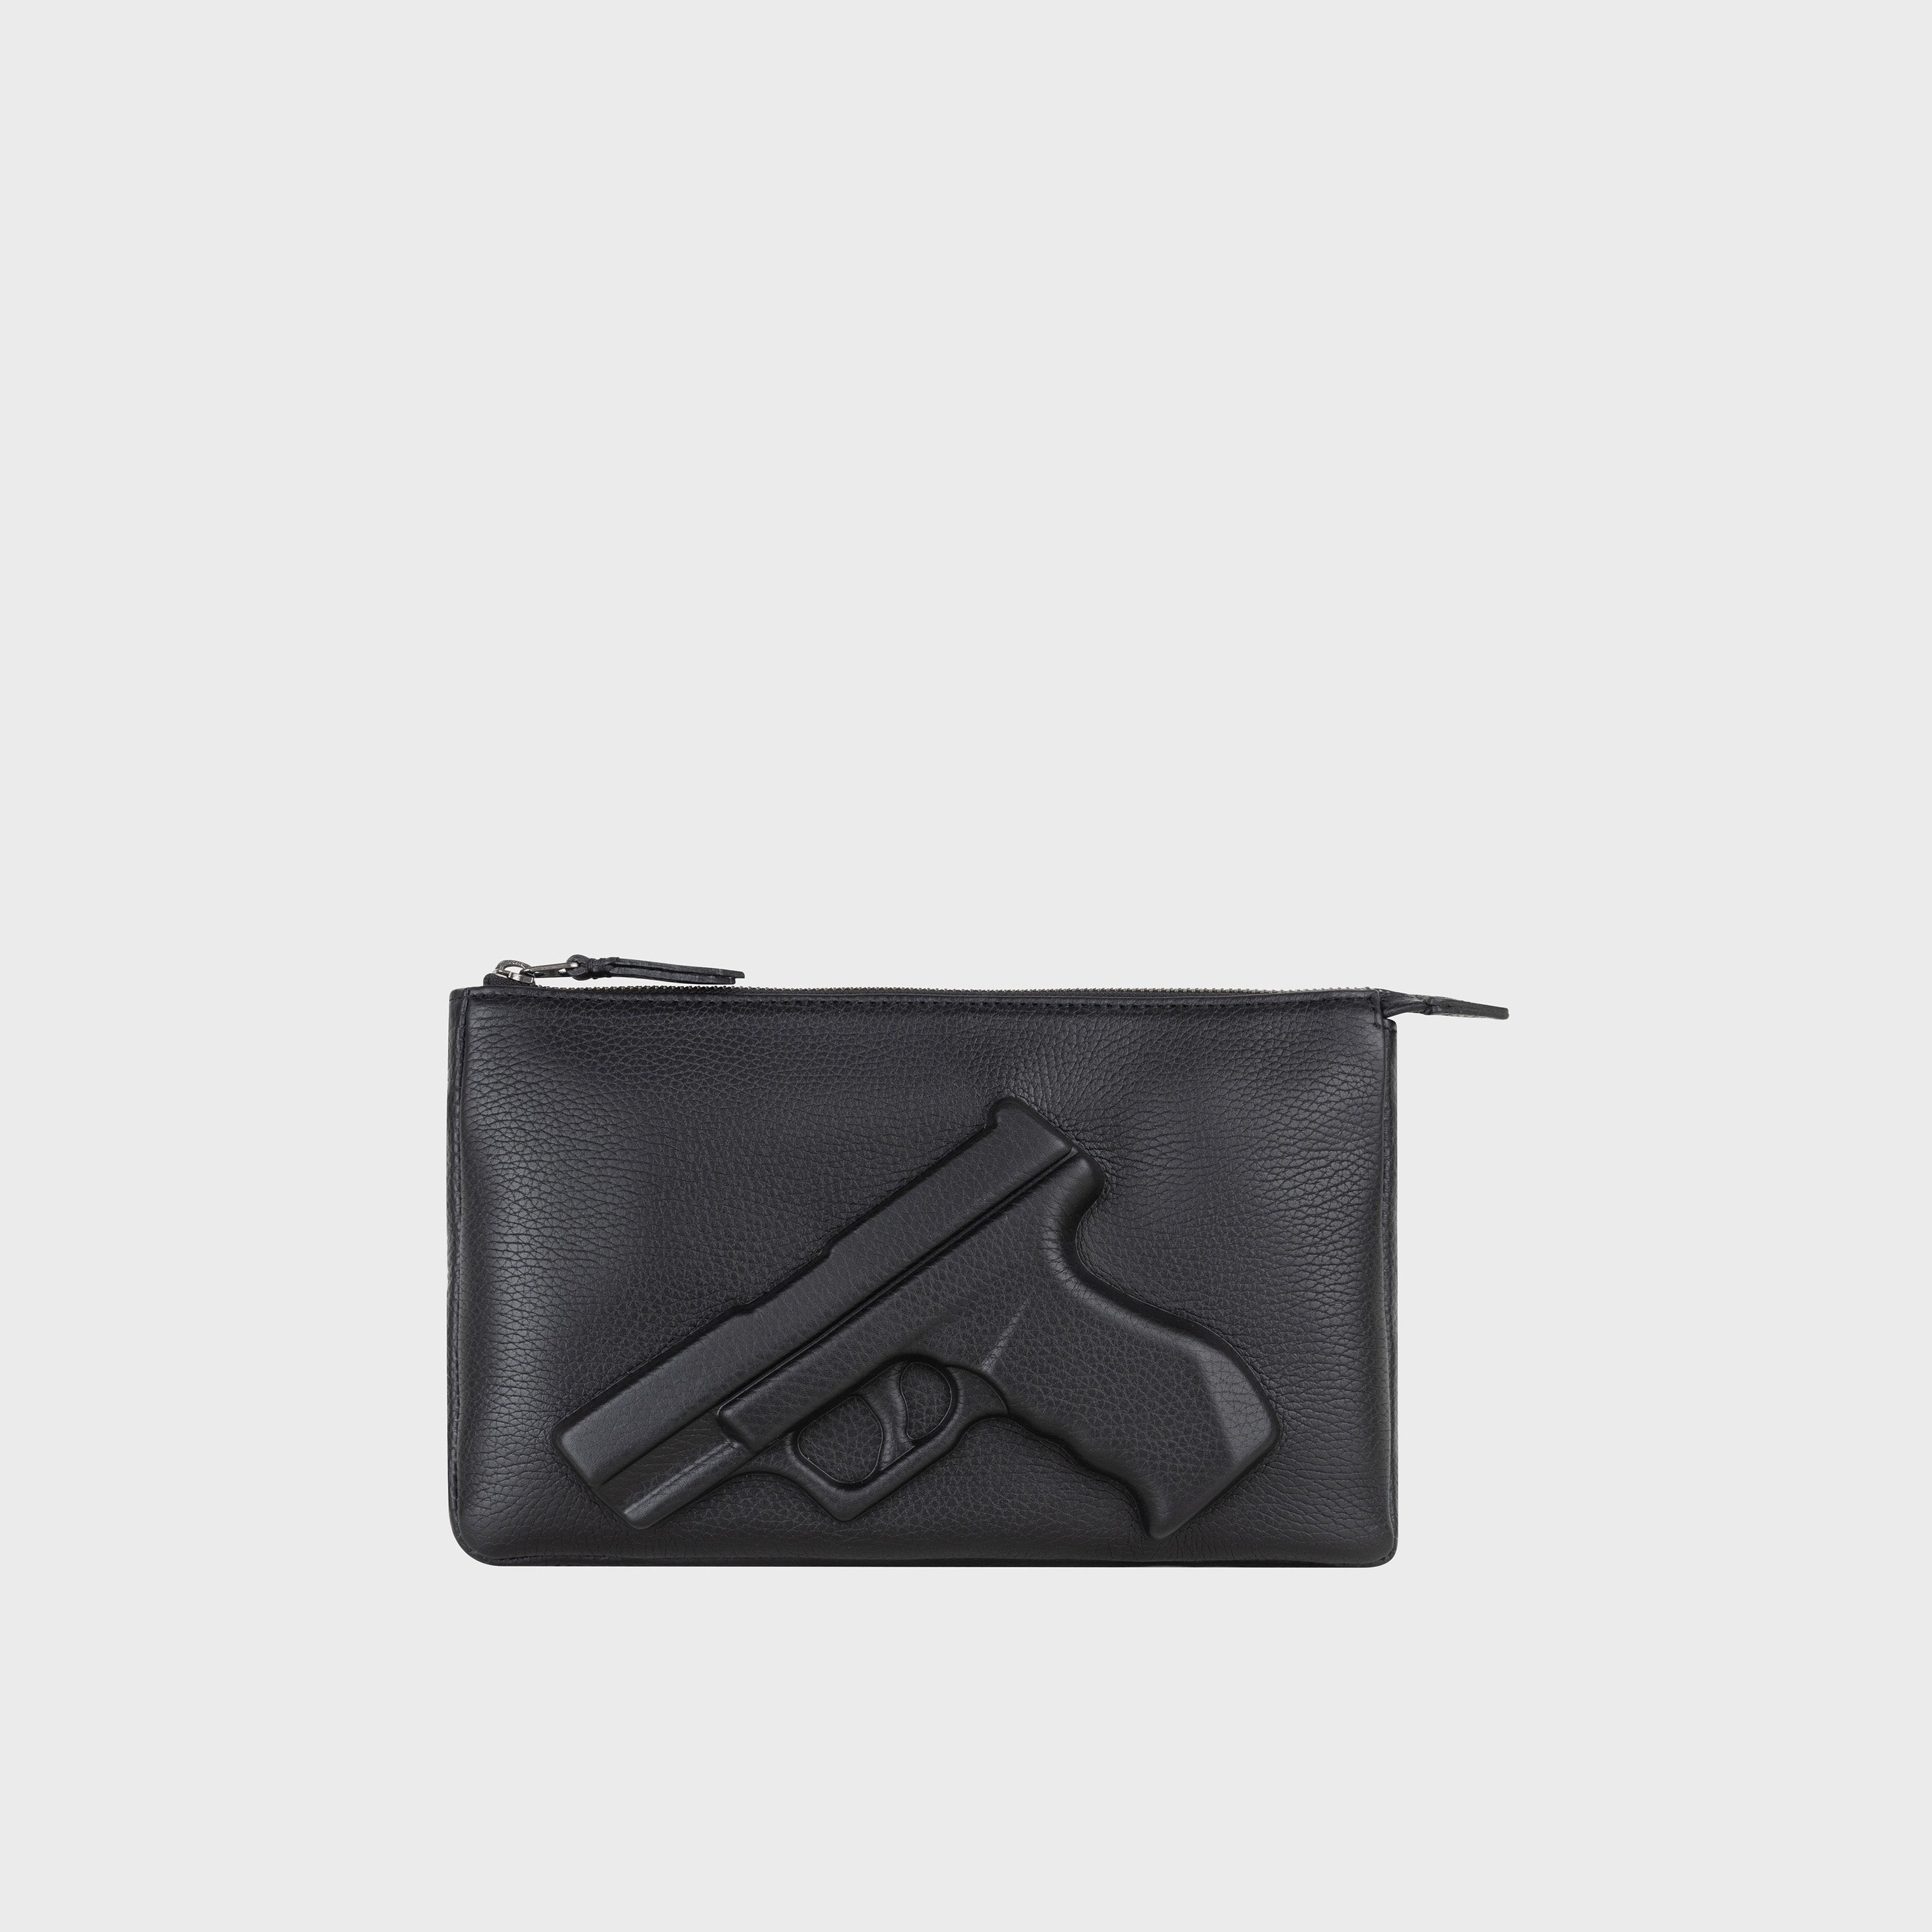 Vlieger & Vandam - Zipped Wallet Gun Black, embossed gun wallet